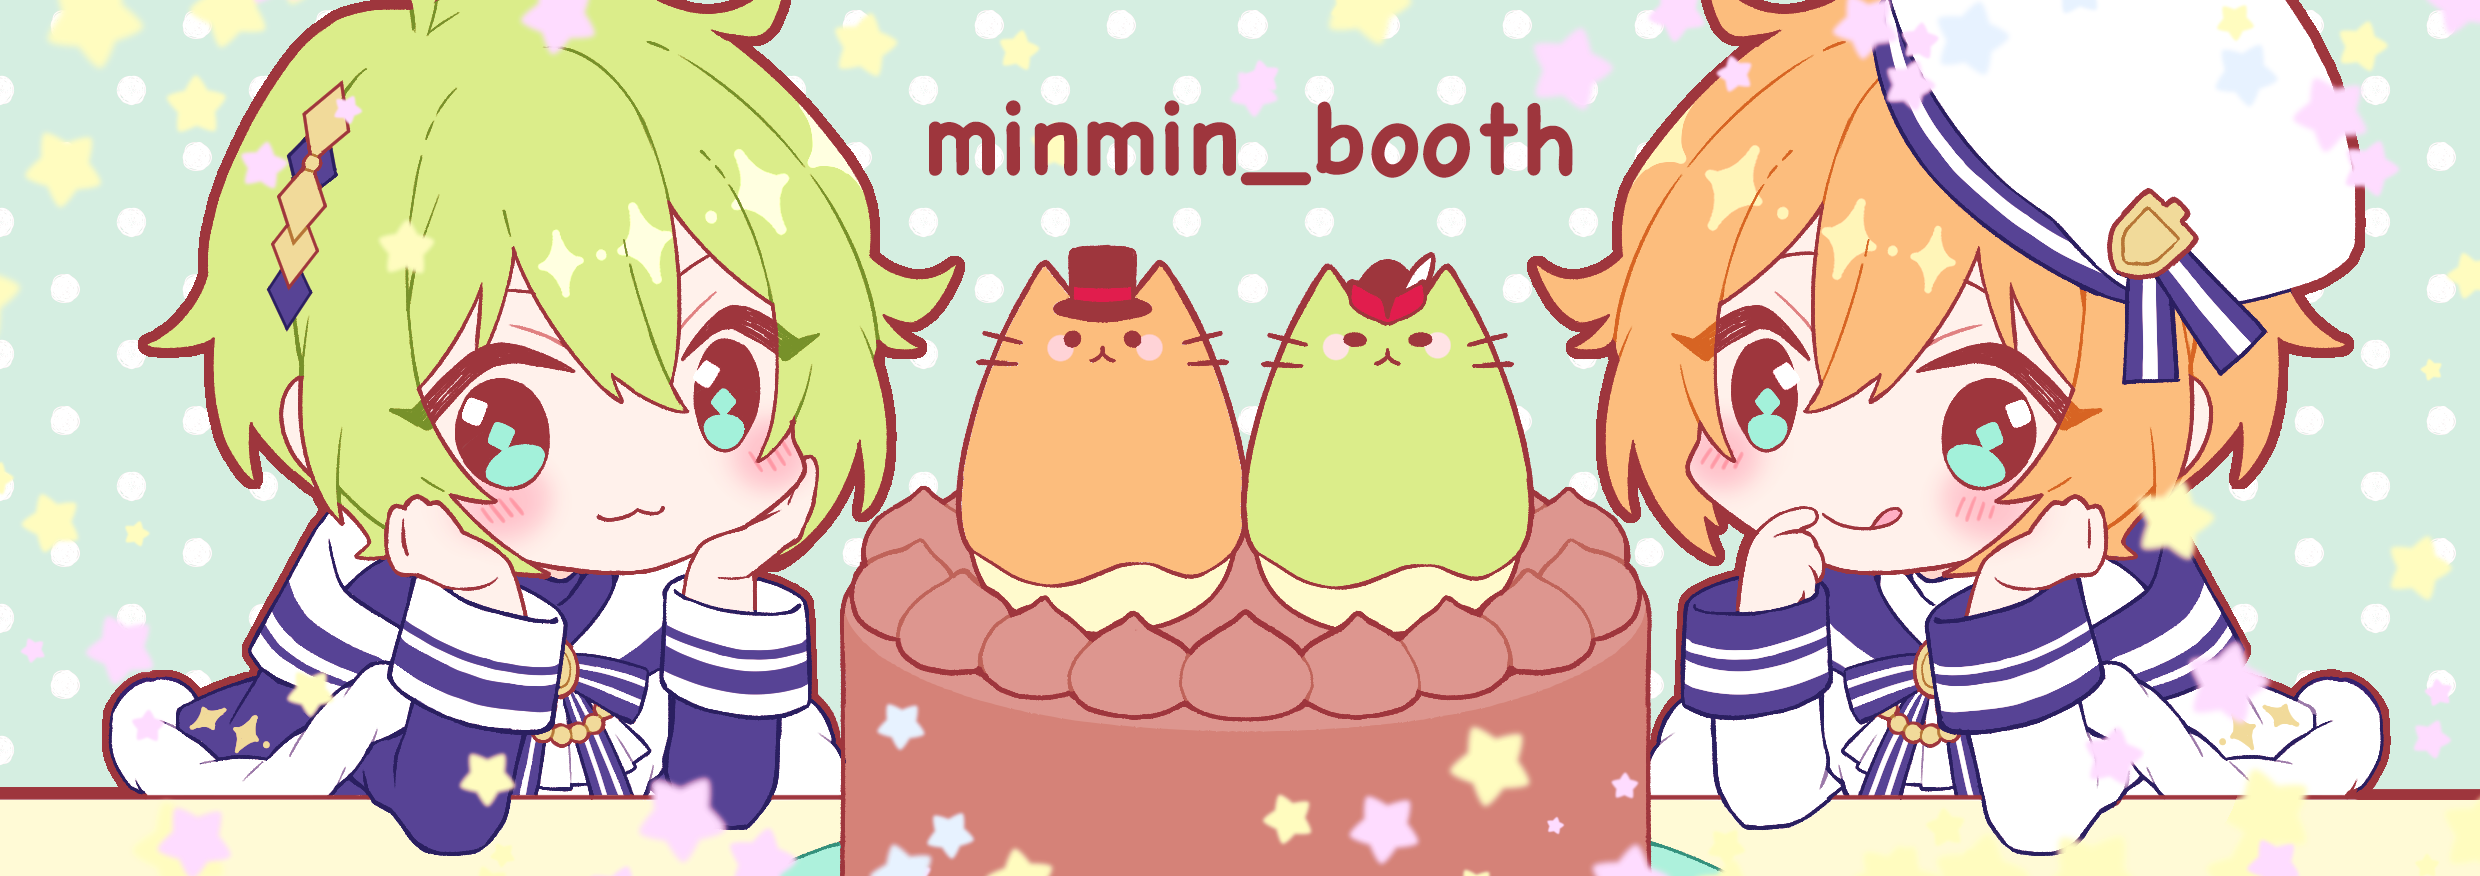 minmin_booth